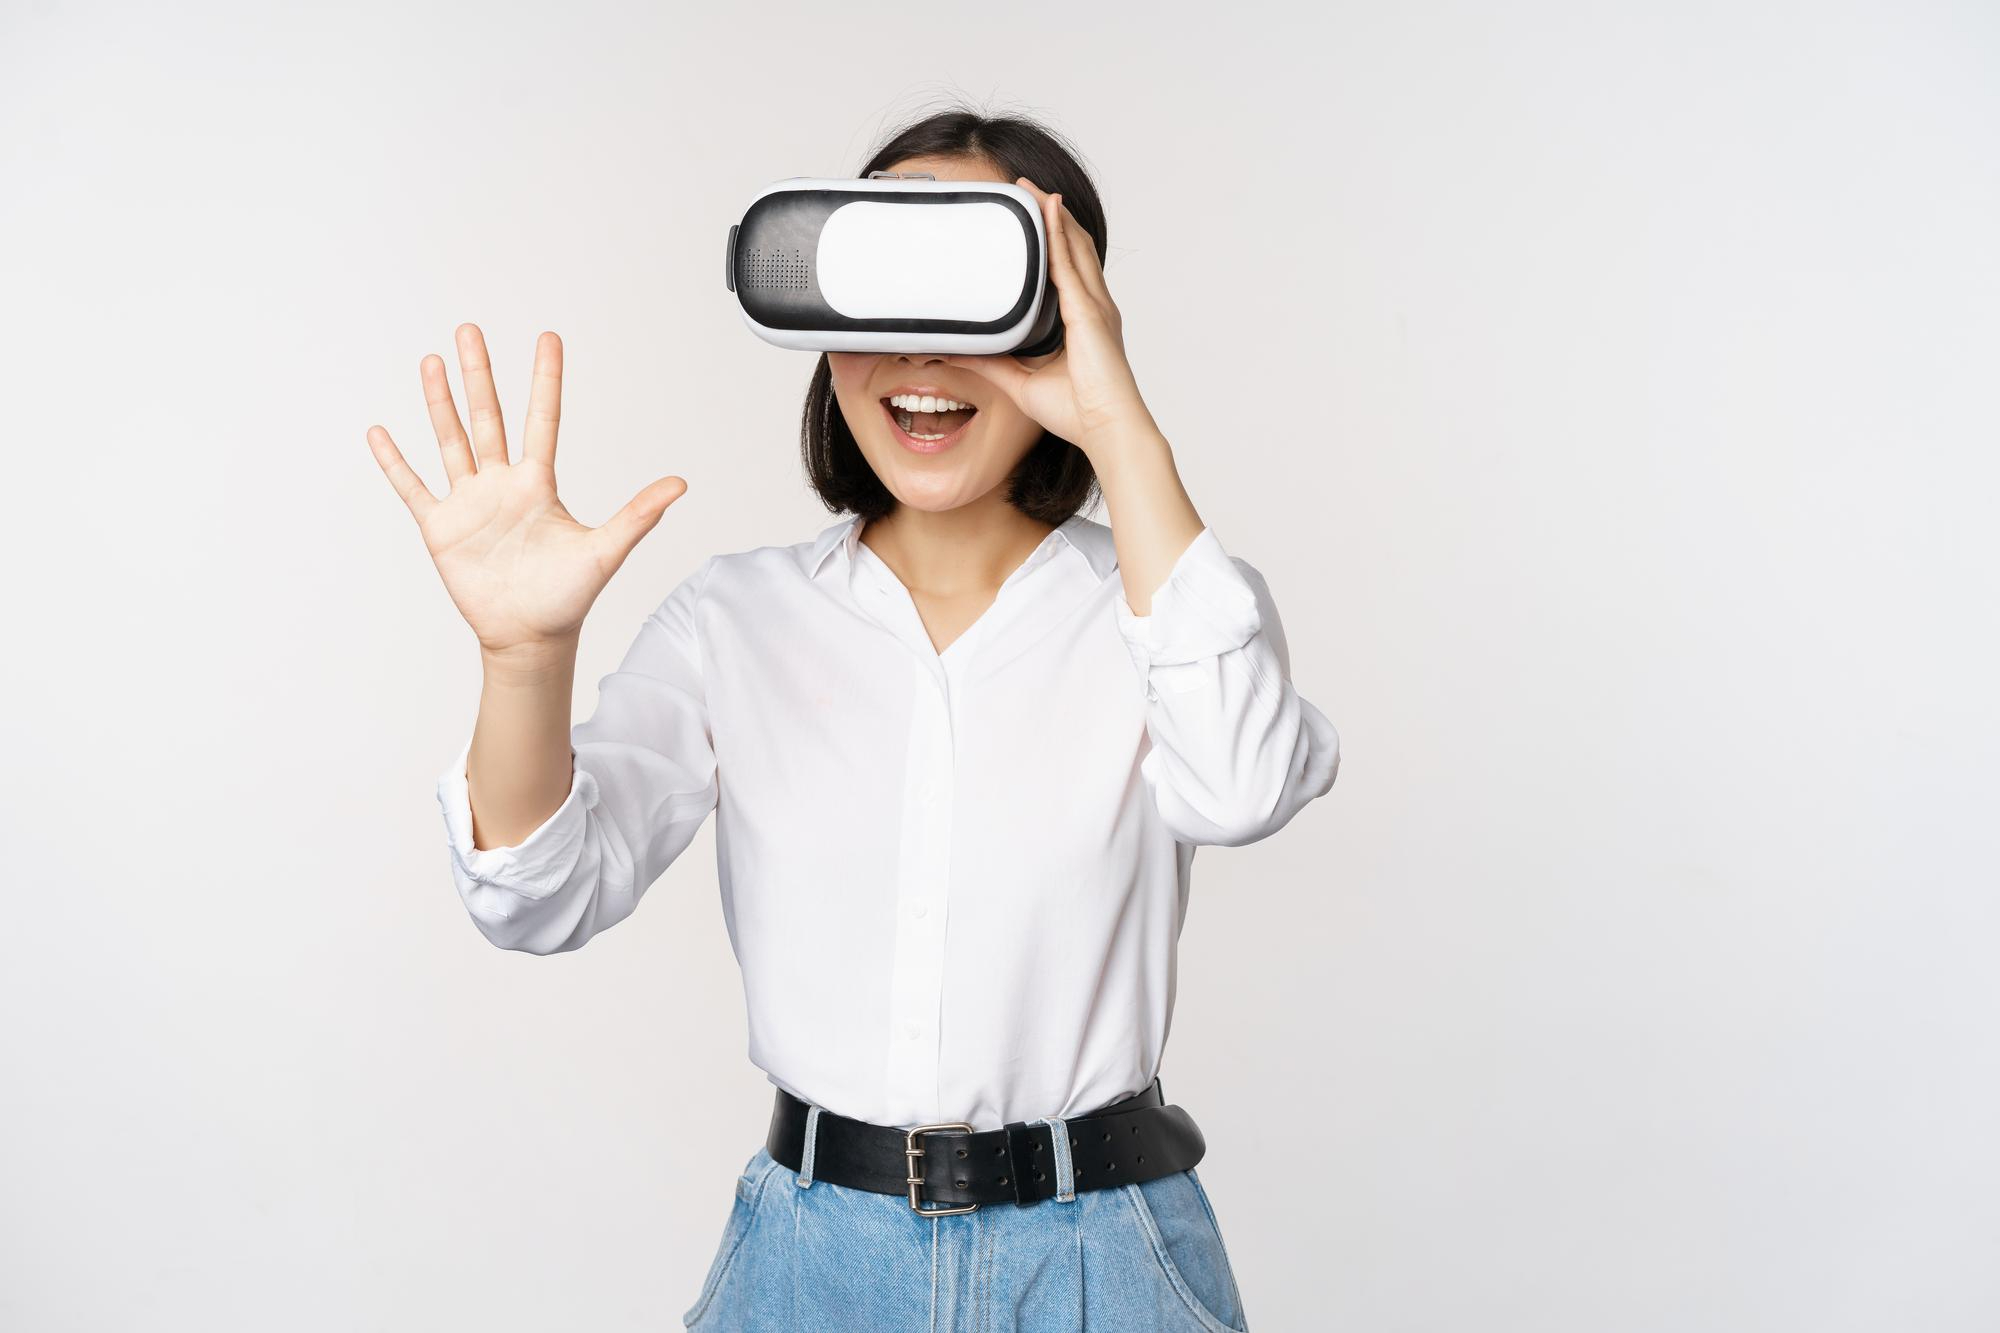 VR in real estate industry by devabit